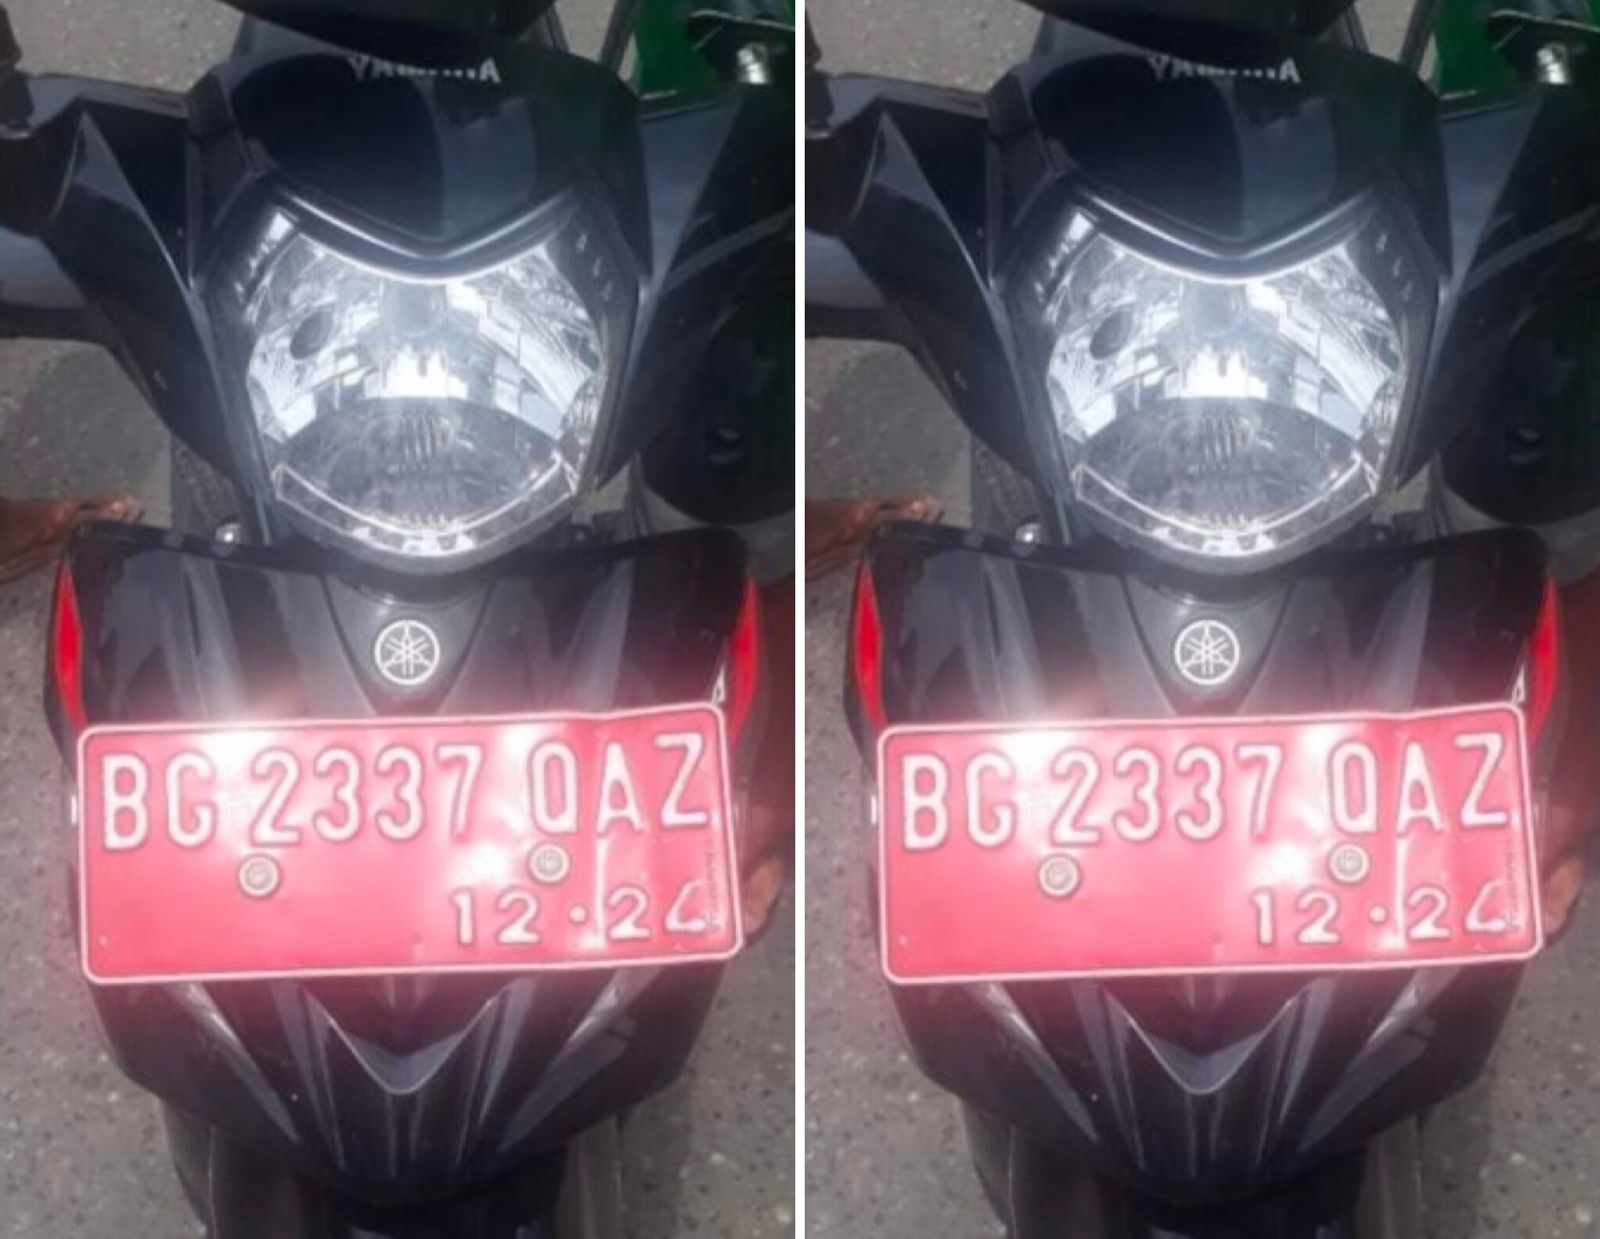 Sontoloyo! Warga Muratara Jambret di Sarolangun Jambi Pakai Sepeda Motor Dinas Guru yang Dicuri